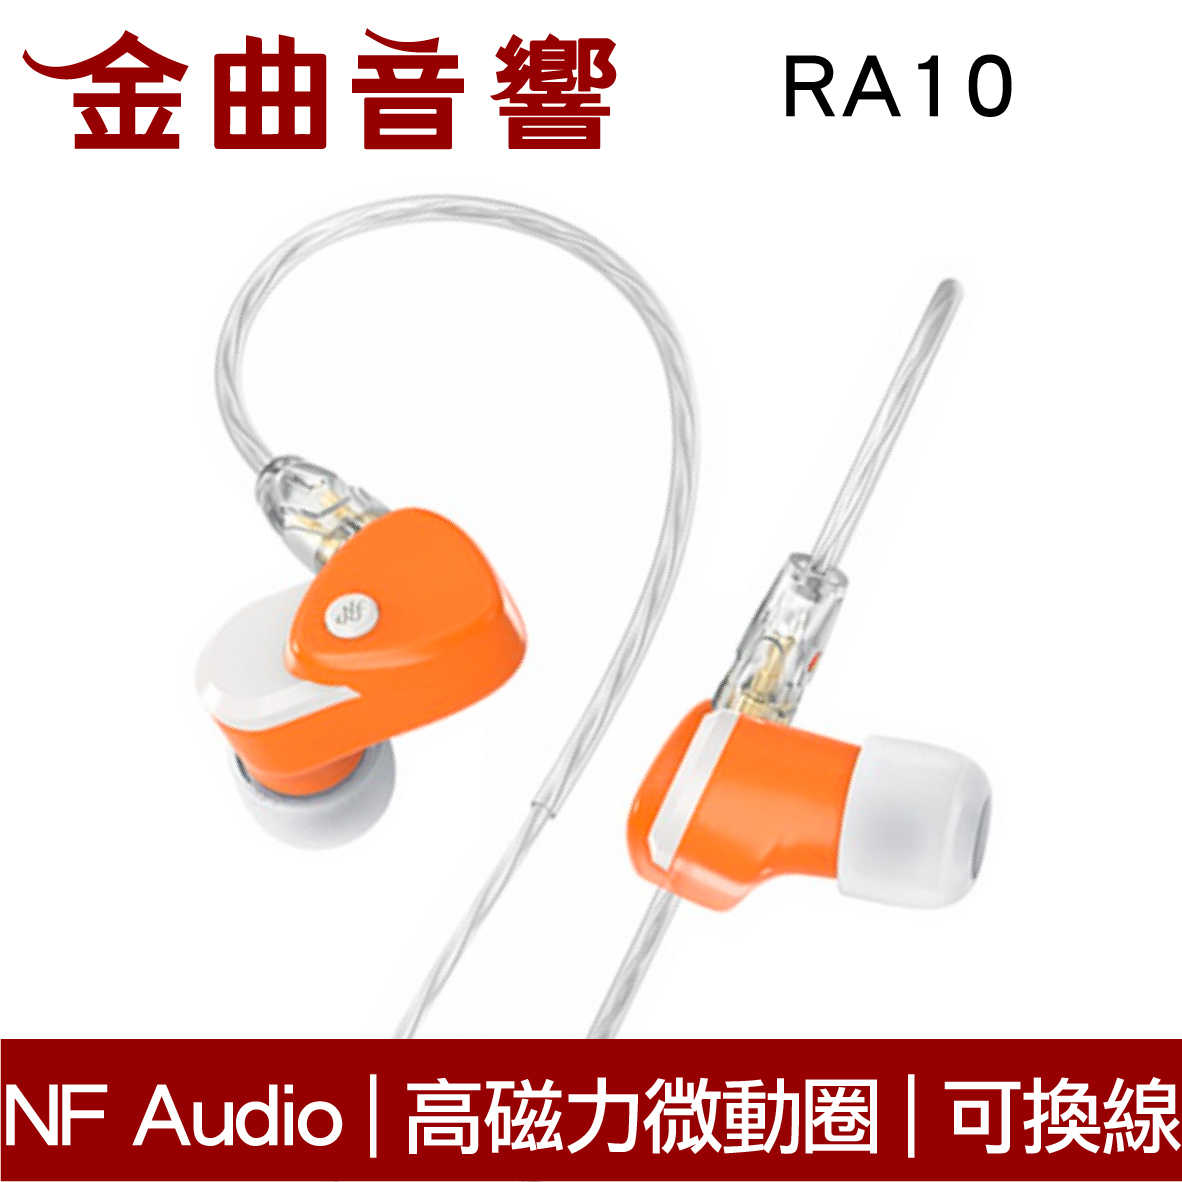 NF Audio 寧梵 RA10 橘色 高磁力 微動圈單元 被動降噪 可換線 入耳式 耳機 | 金曲音響